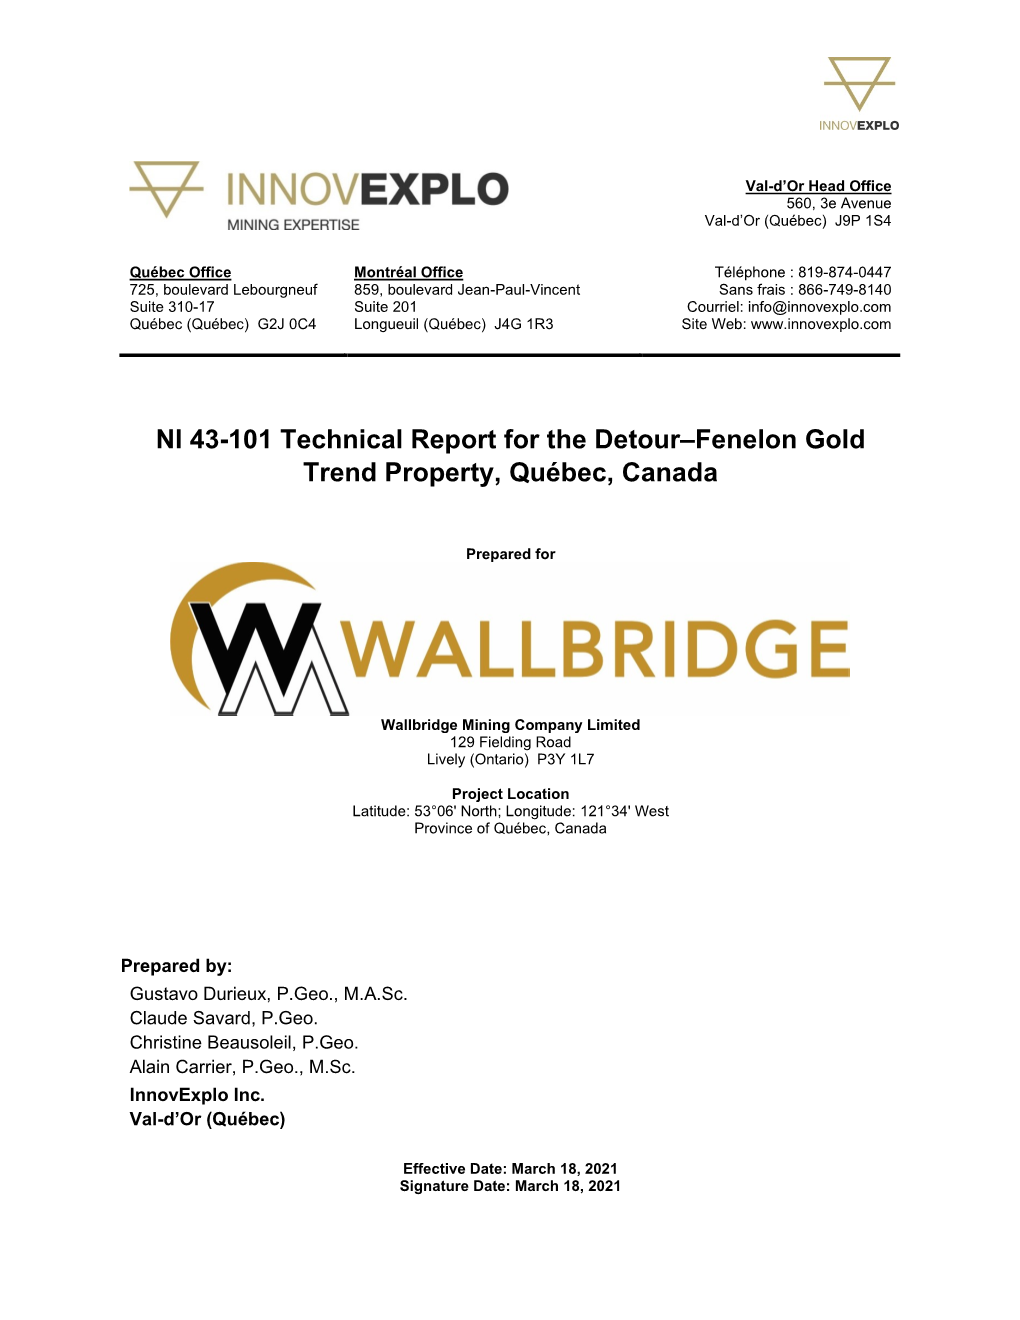 NI 43-101 Technical Report for the Detour–Fenelon Gold Trend Property, Québec, Canada